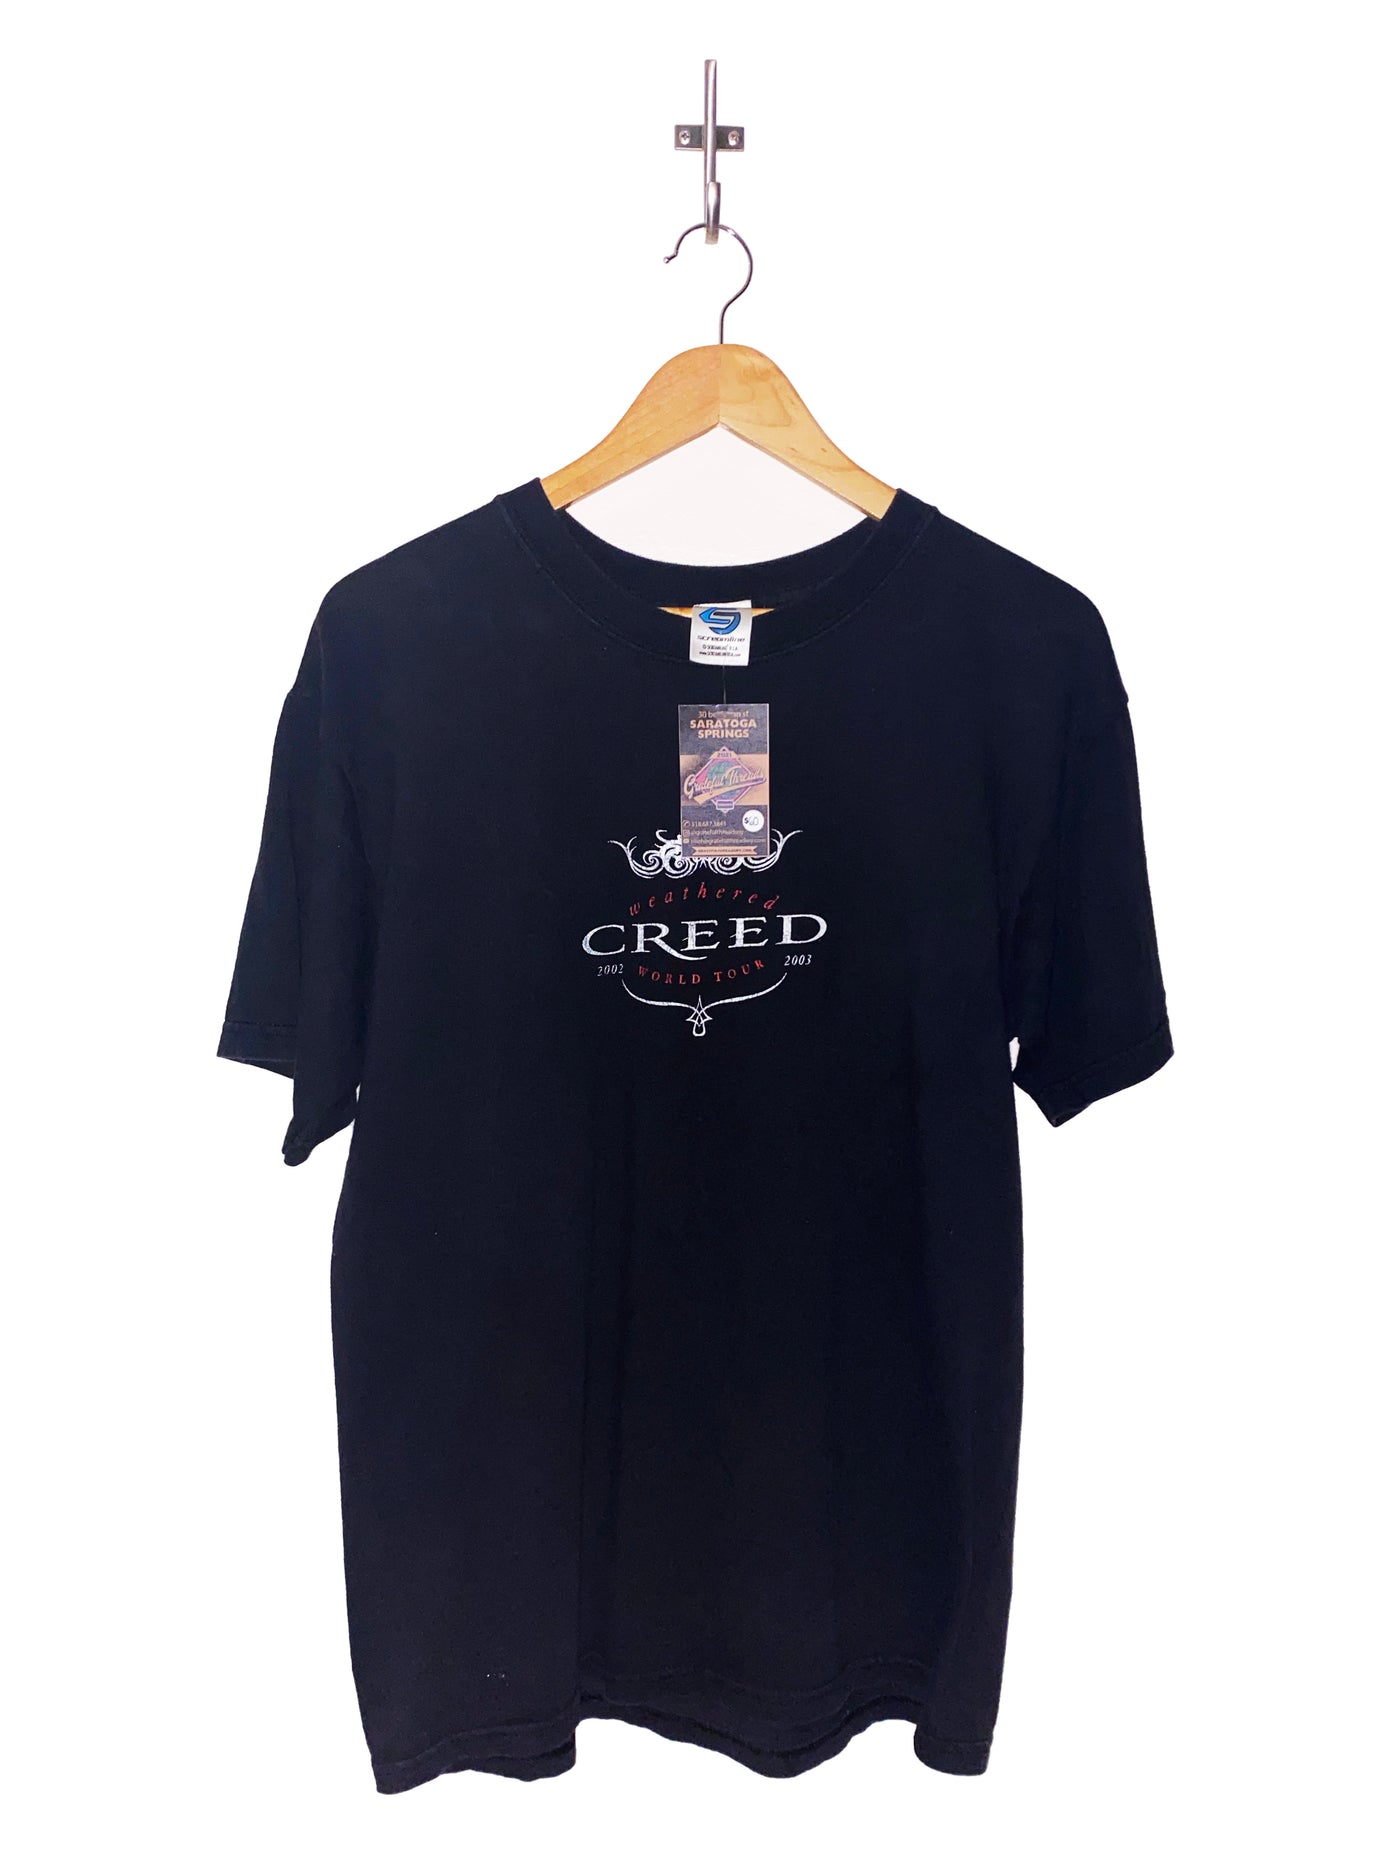 Vintage 2003 Creed Tour T-Shirt